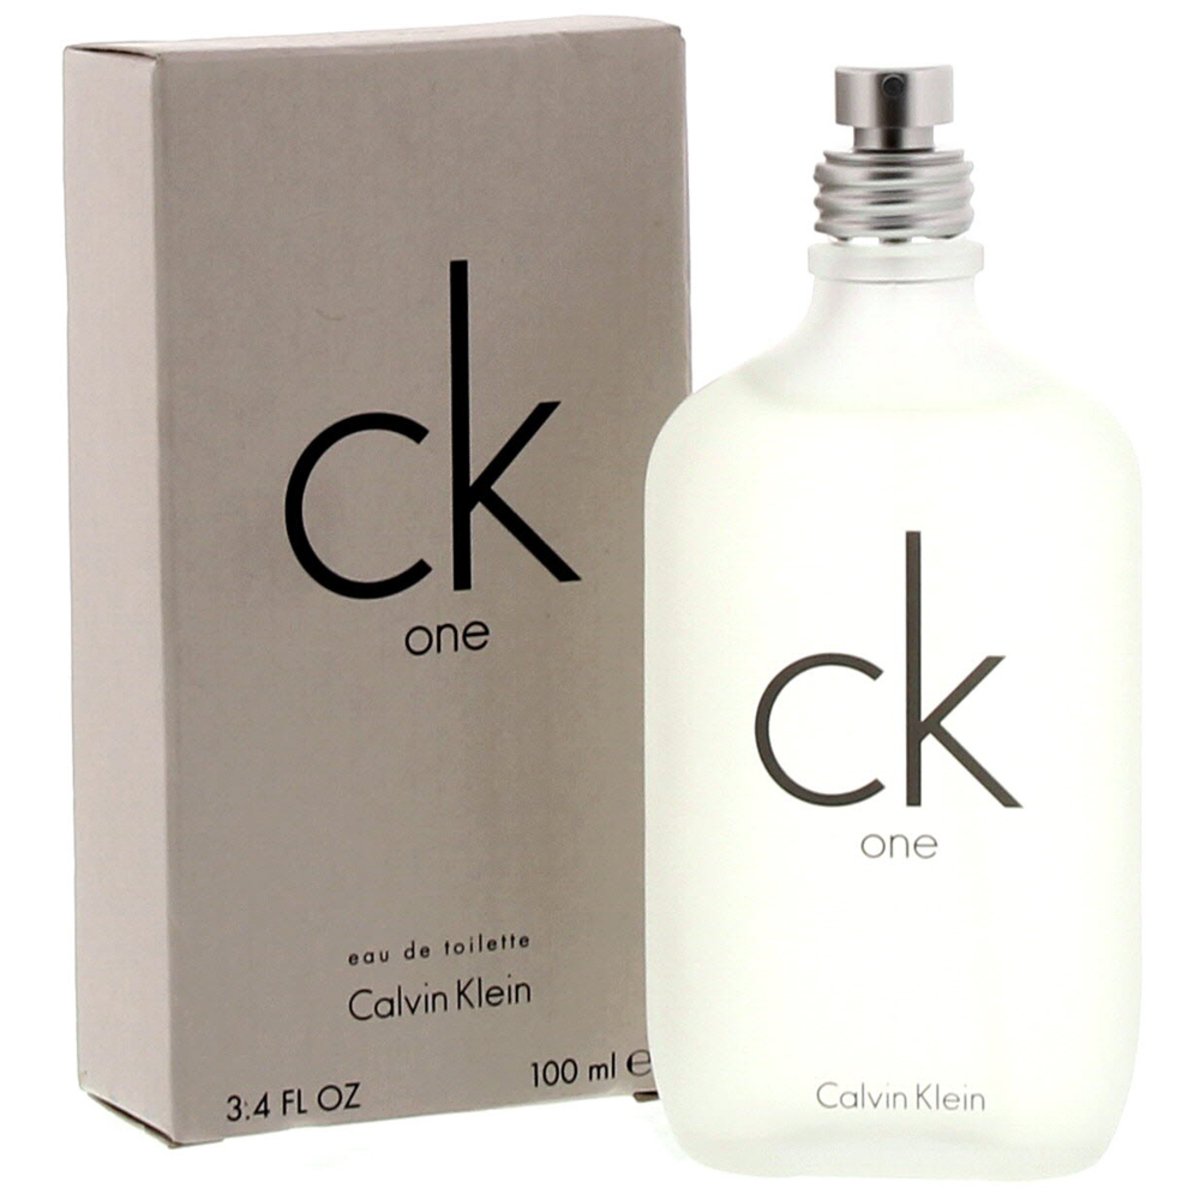 Shop Calvin Klein Mens Perfume online